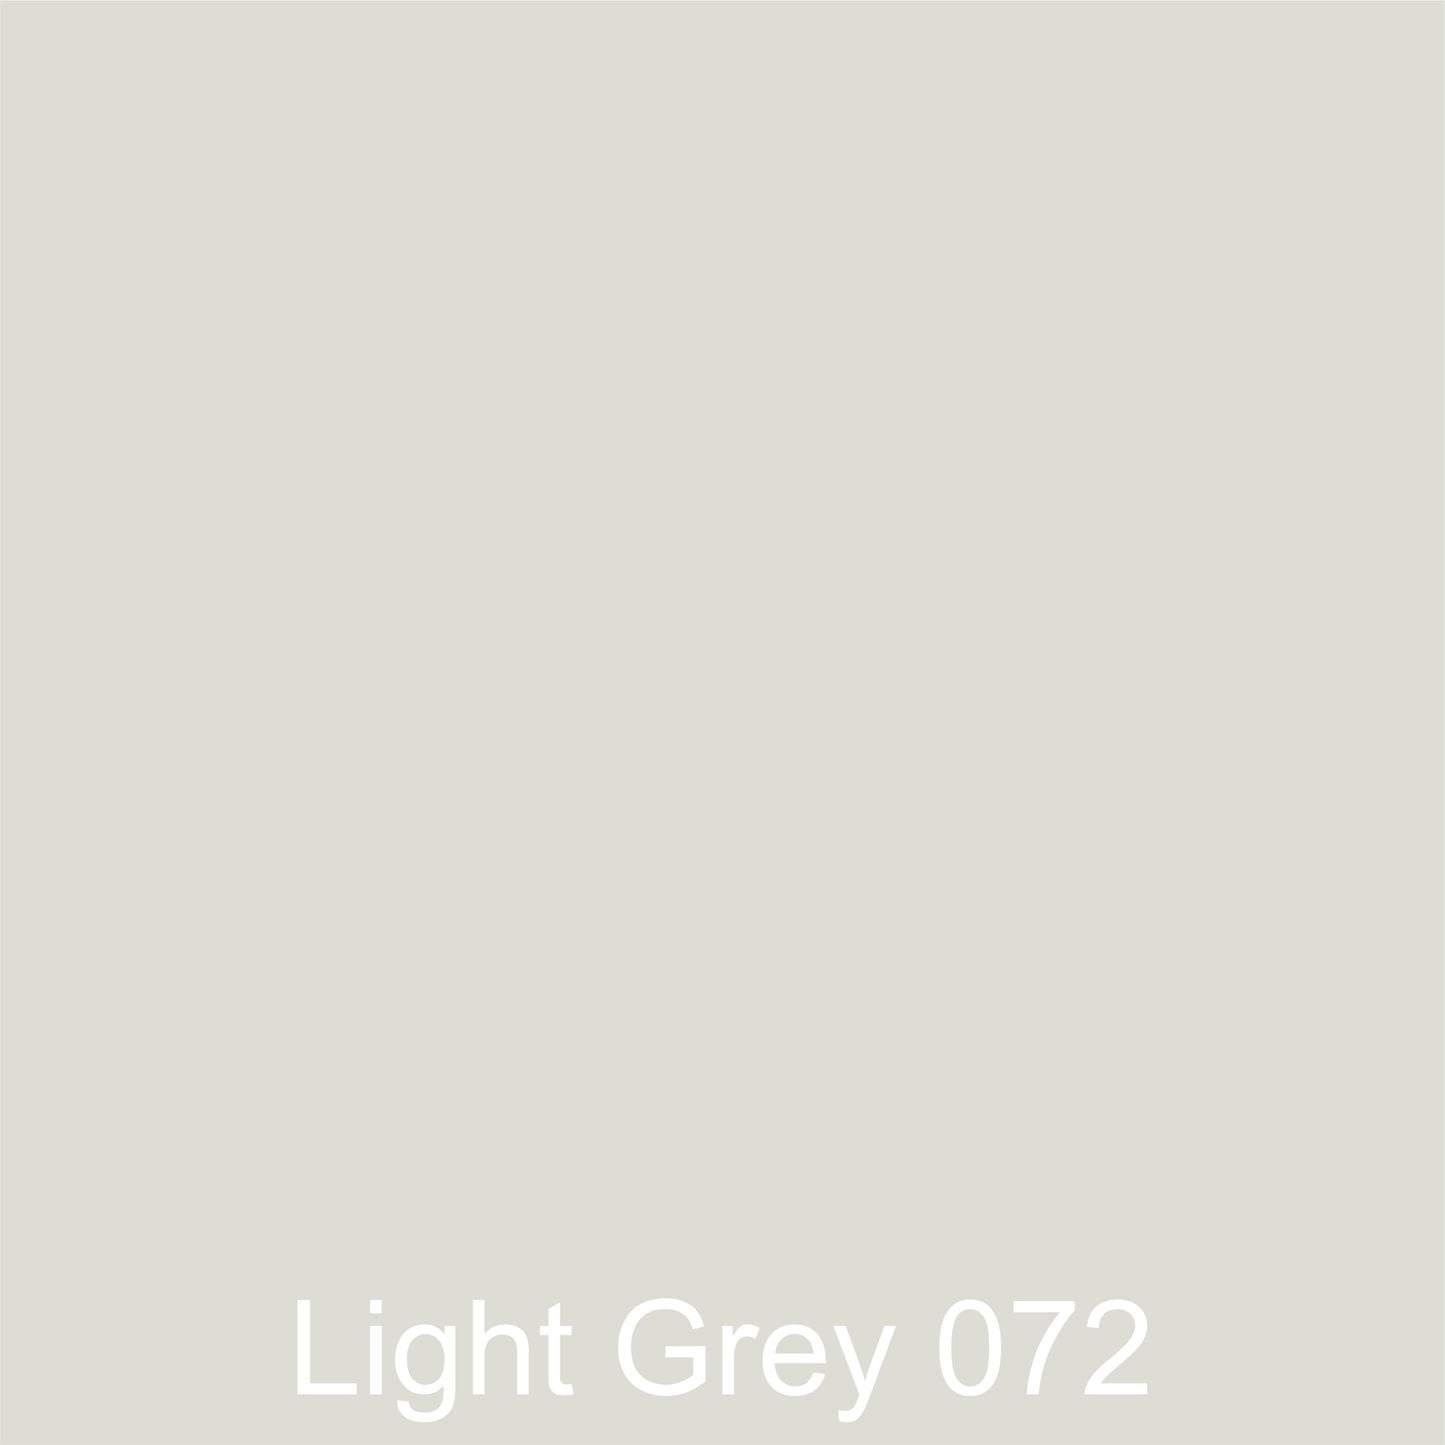 Oracal 651 Gloss :- Light Grey - 072